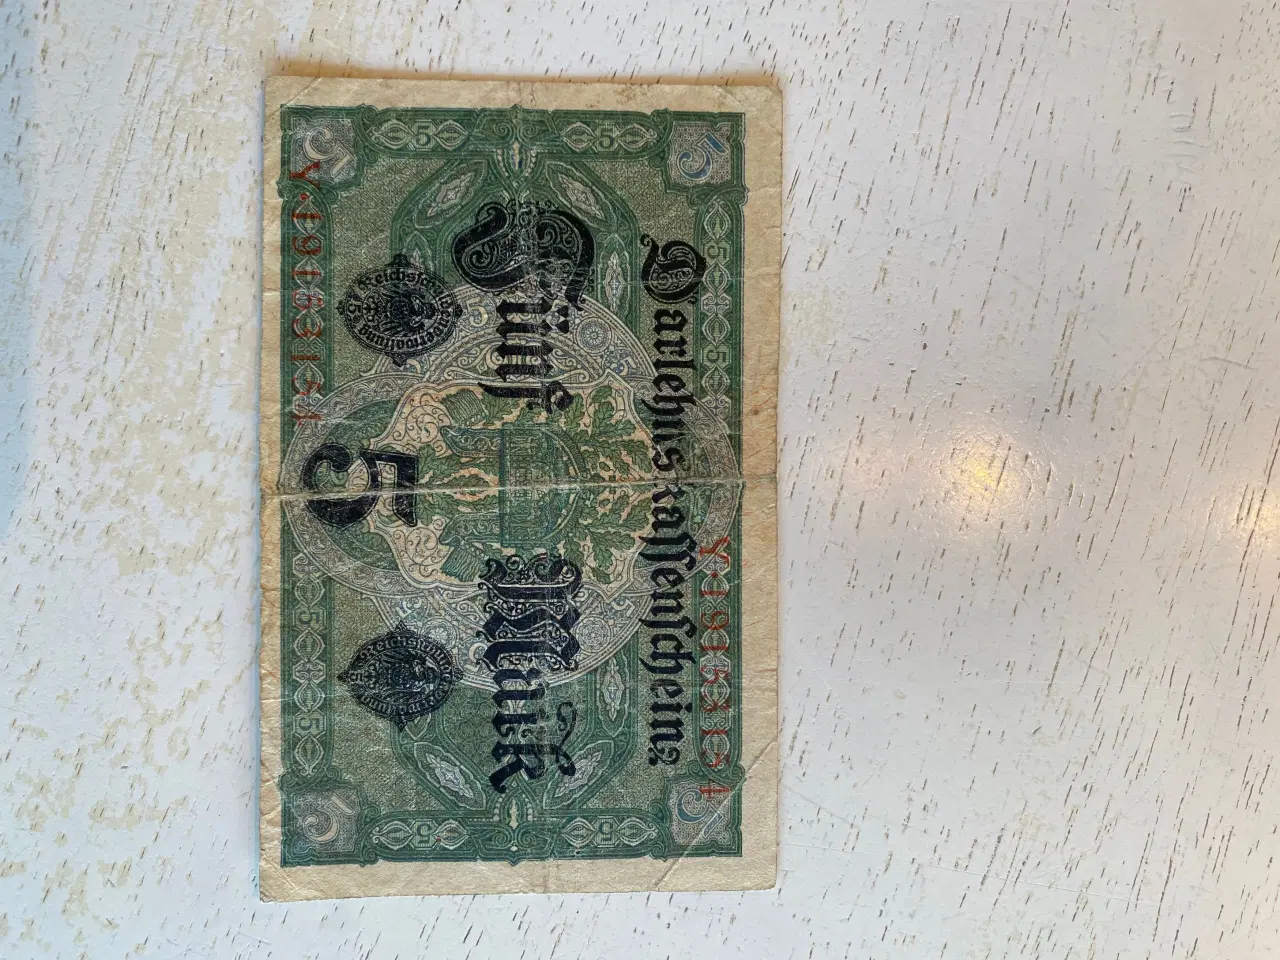 Billede 1 - 5 mark seddel fra 1917